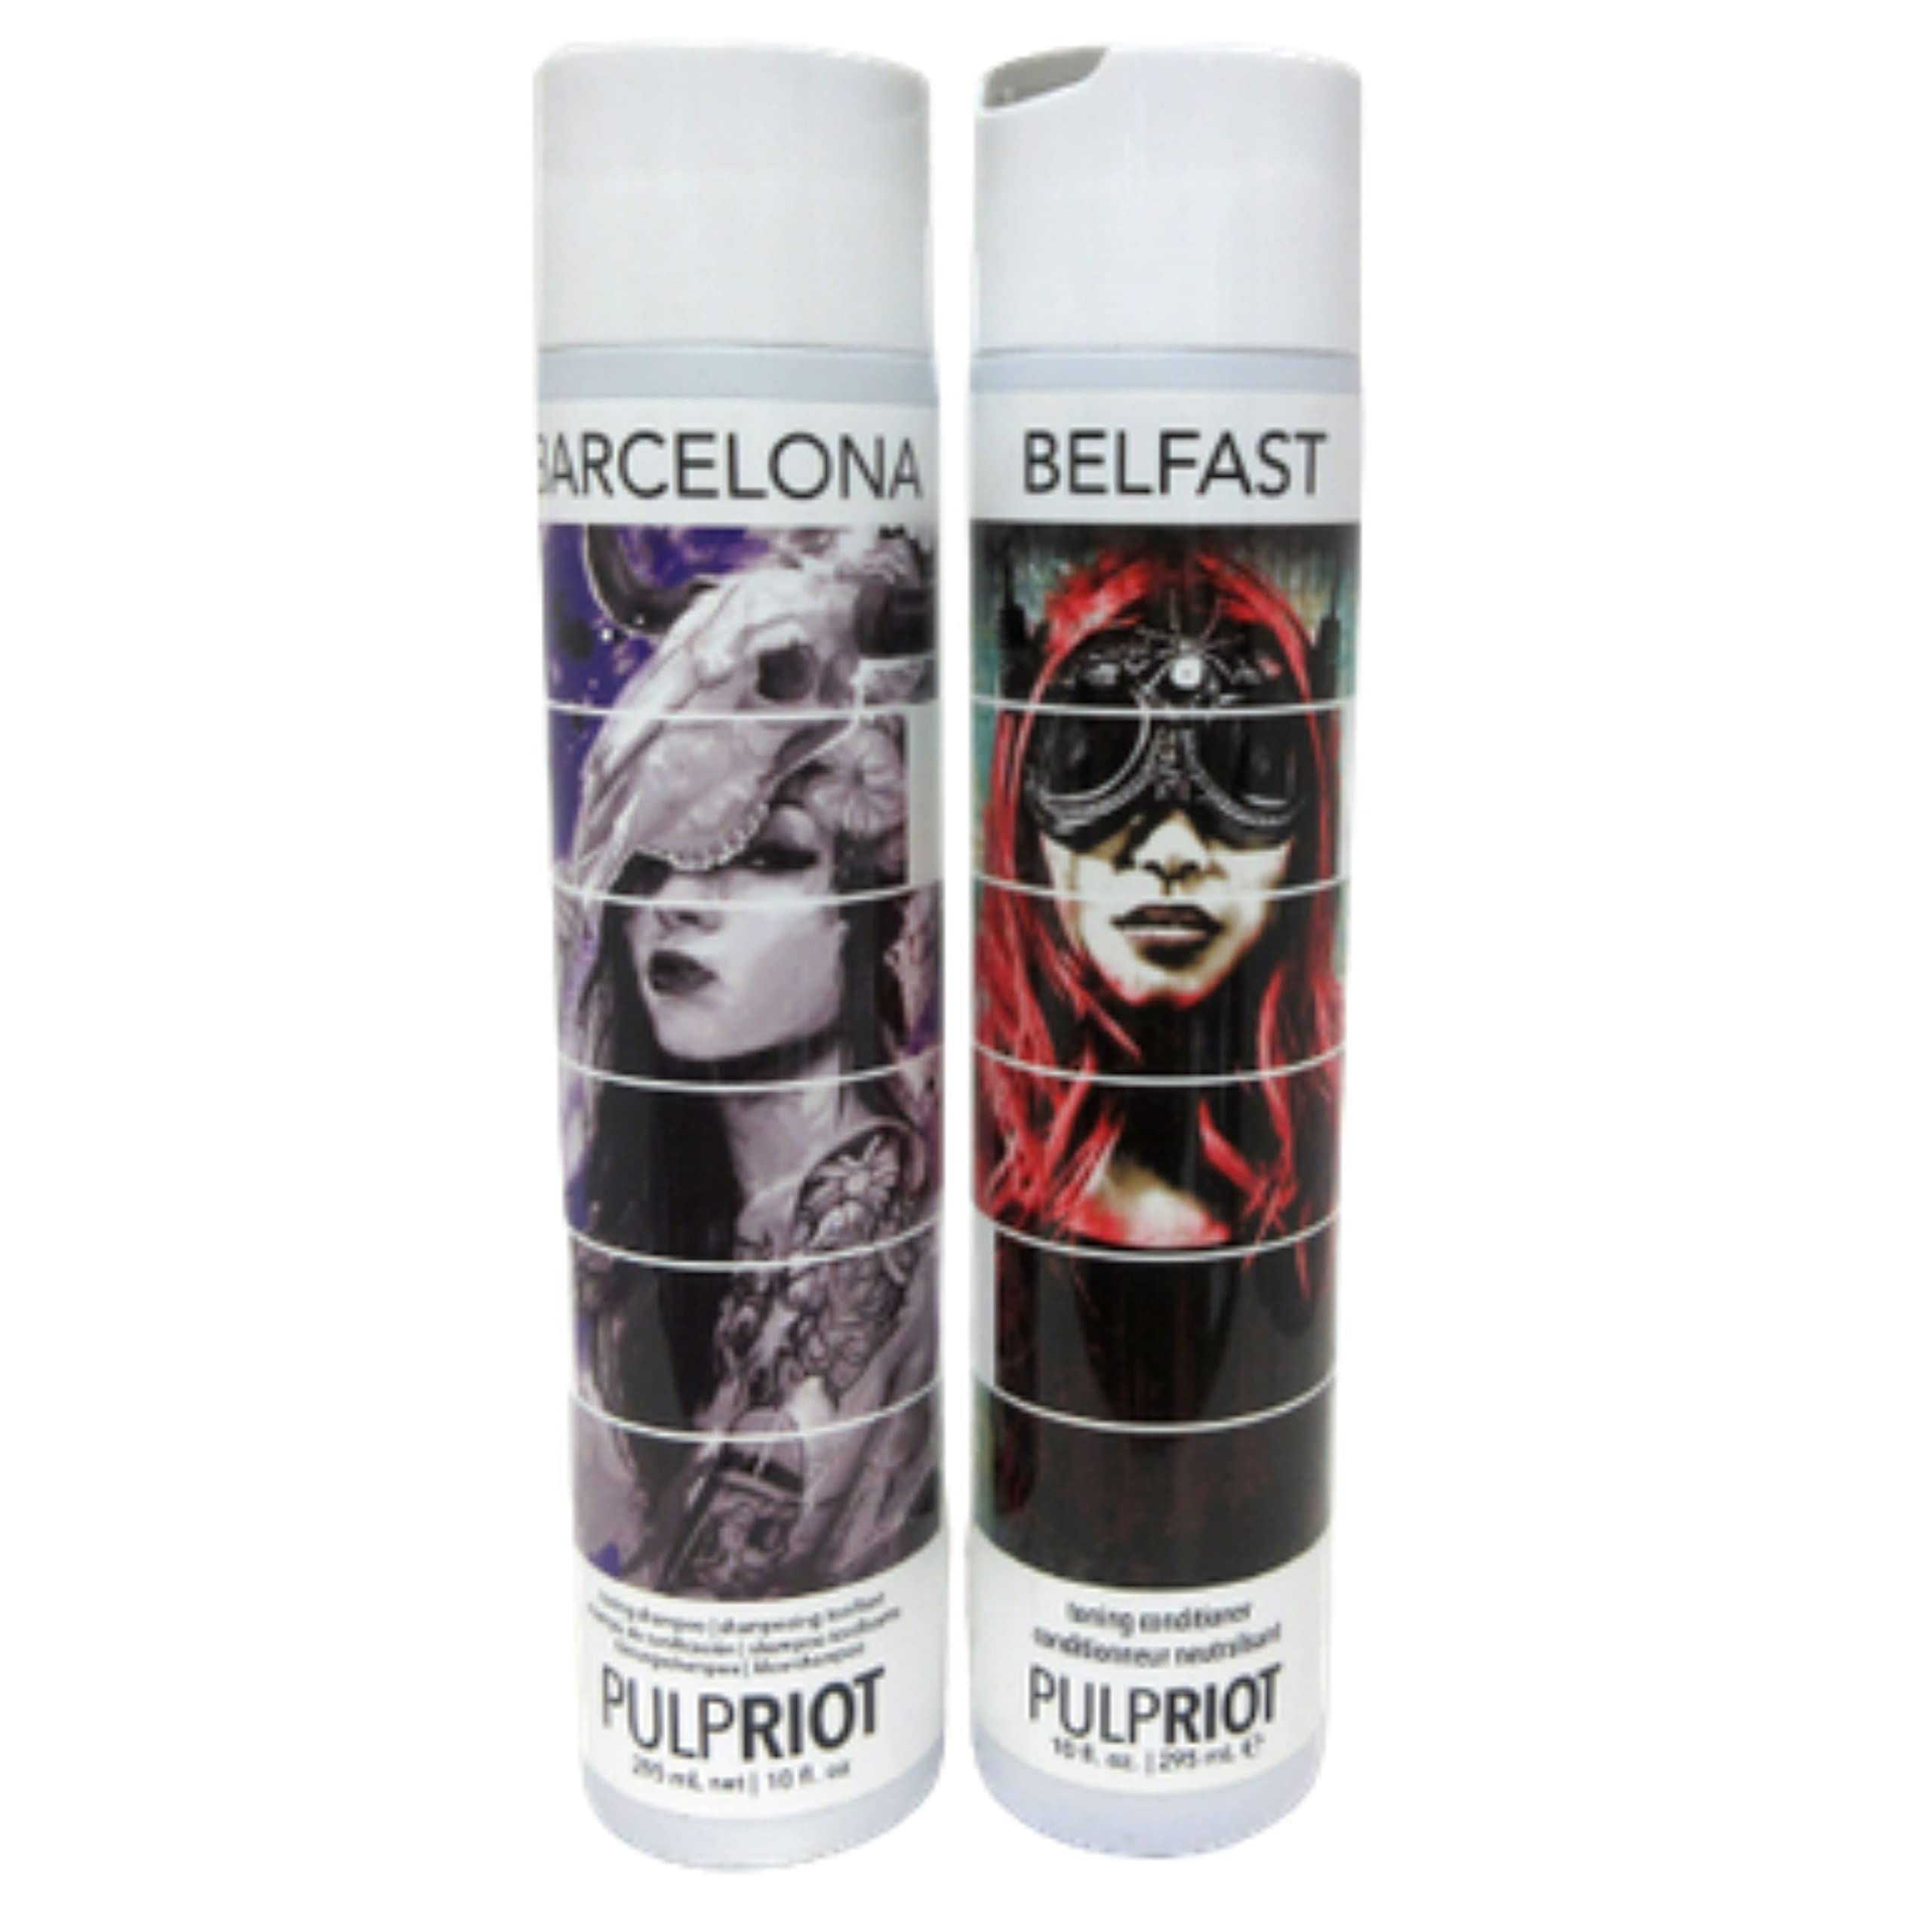 Pulp Riot - Barcelona & Belfast 10 fl oz - Shampoo and Conditioner 2-pack